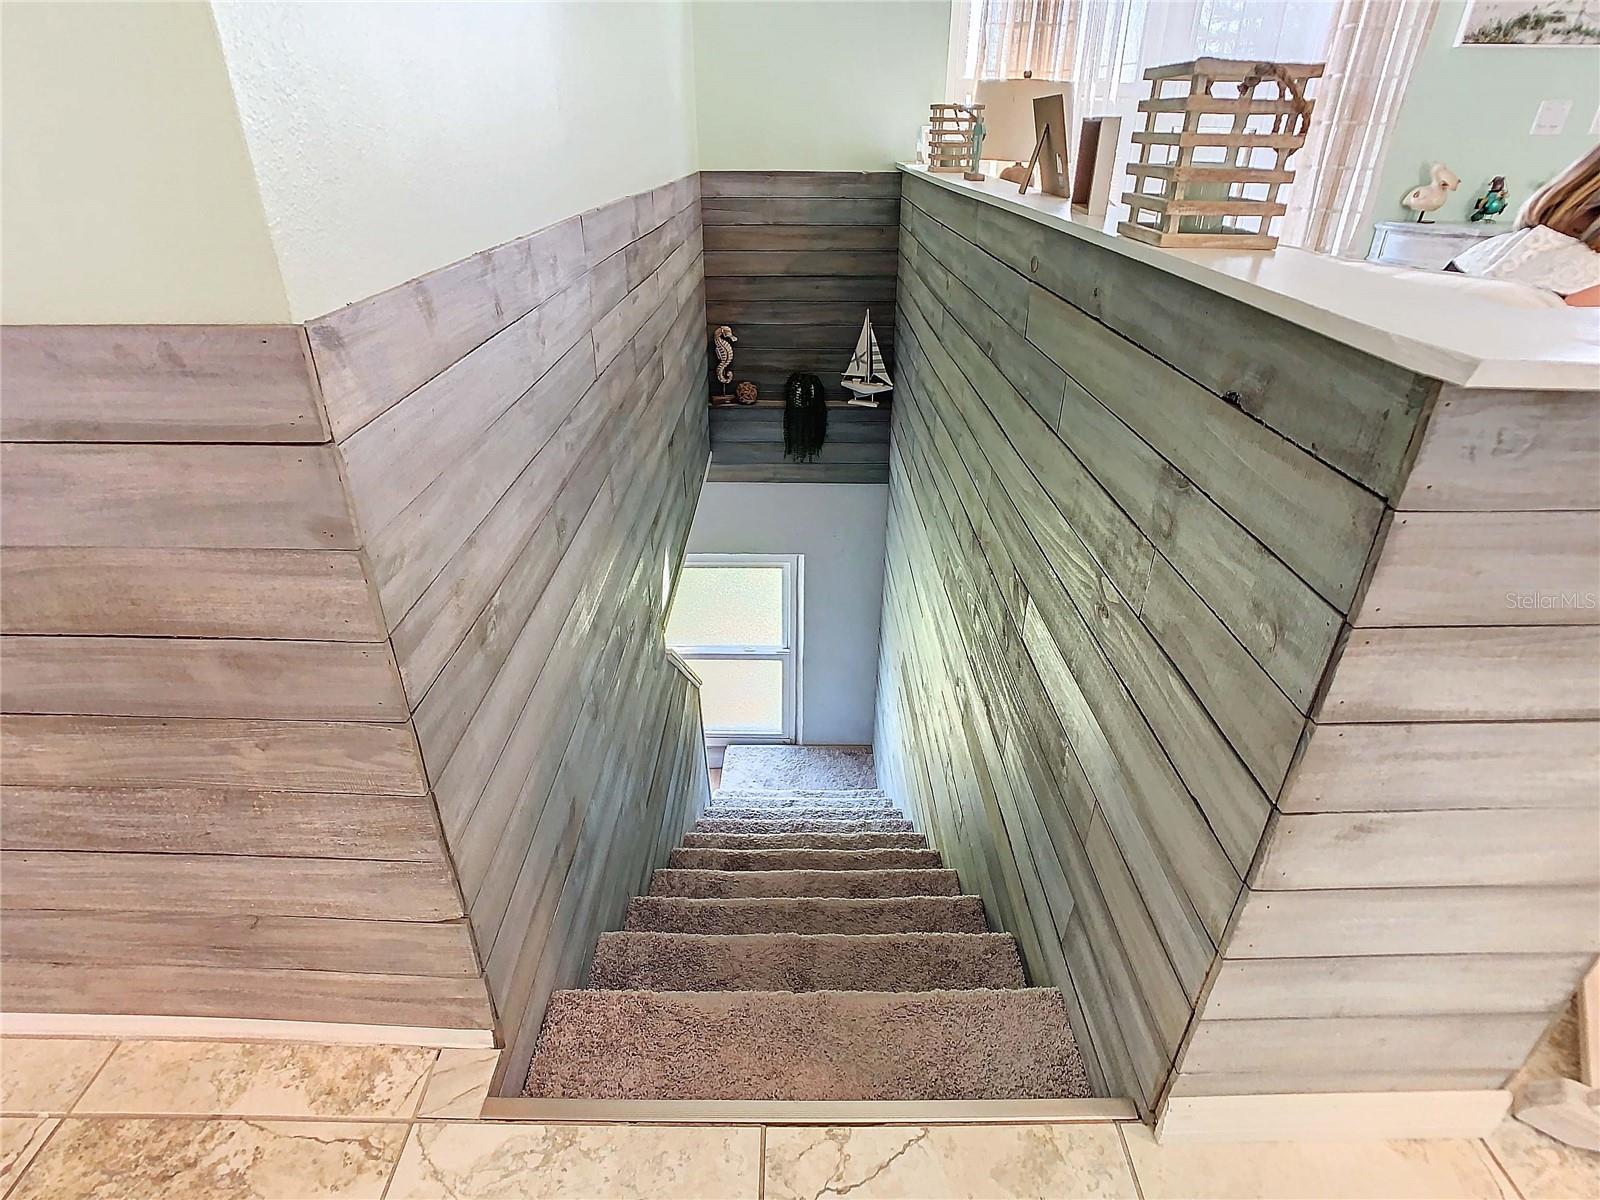 Indoor stairway to lower level